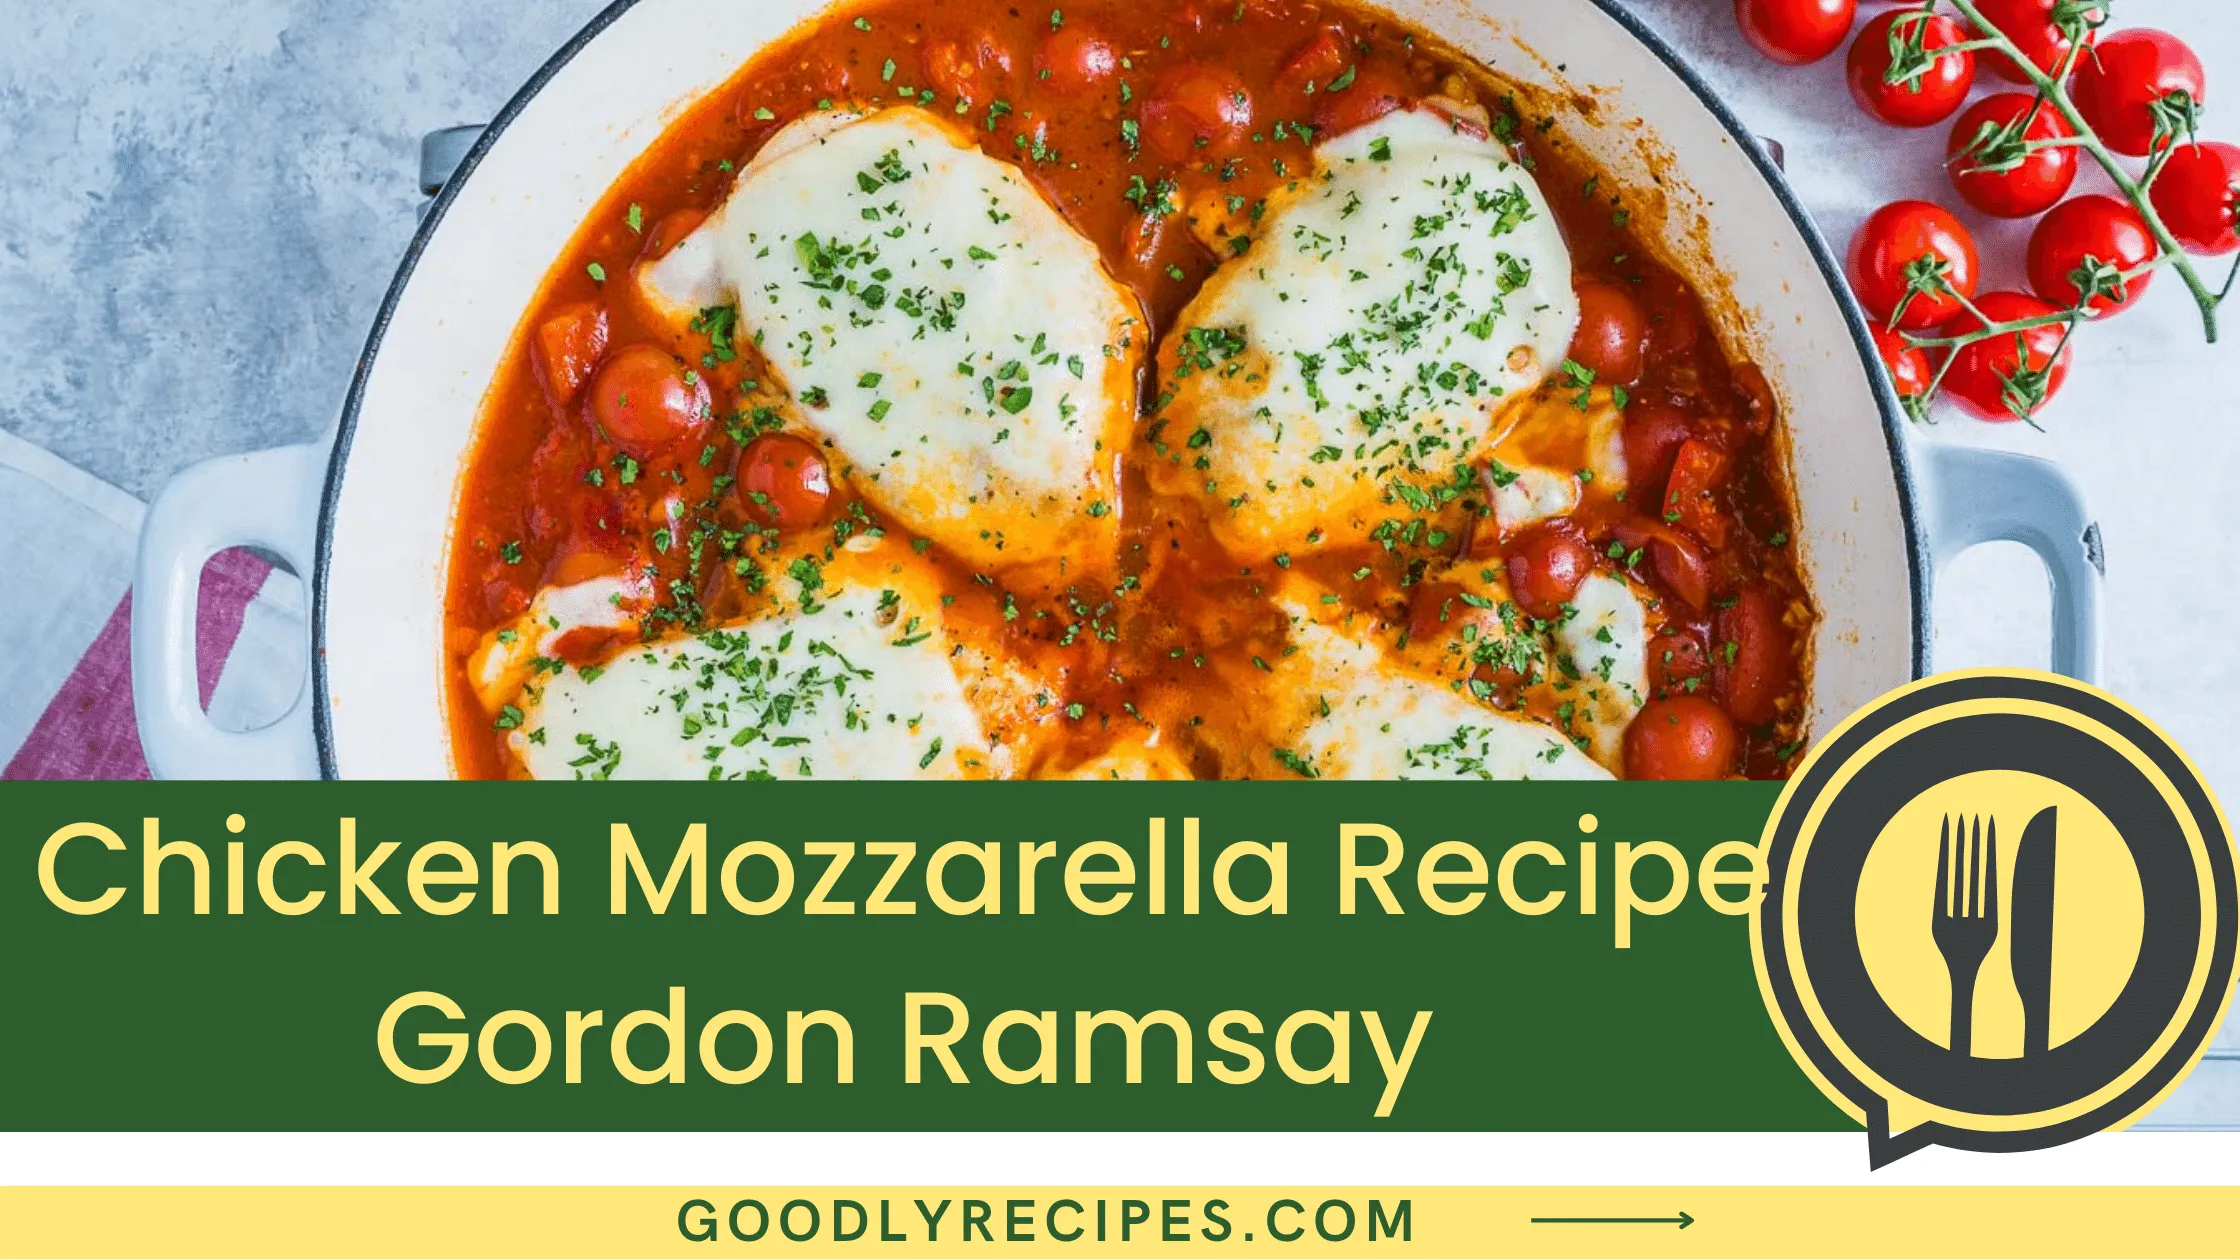 Chicken Mozzarella Recipe Gordon Ramsay - For Food Lovers